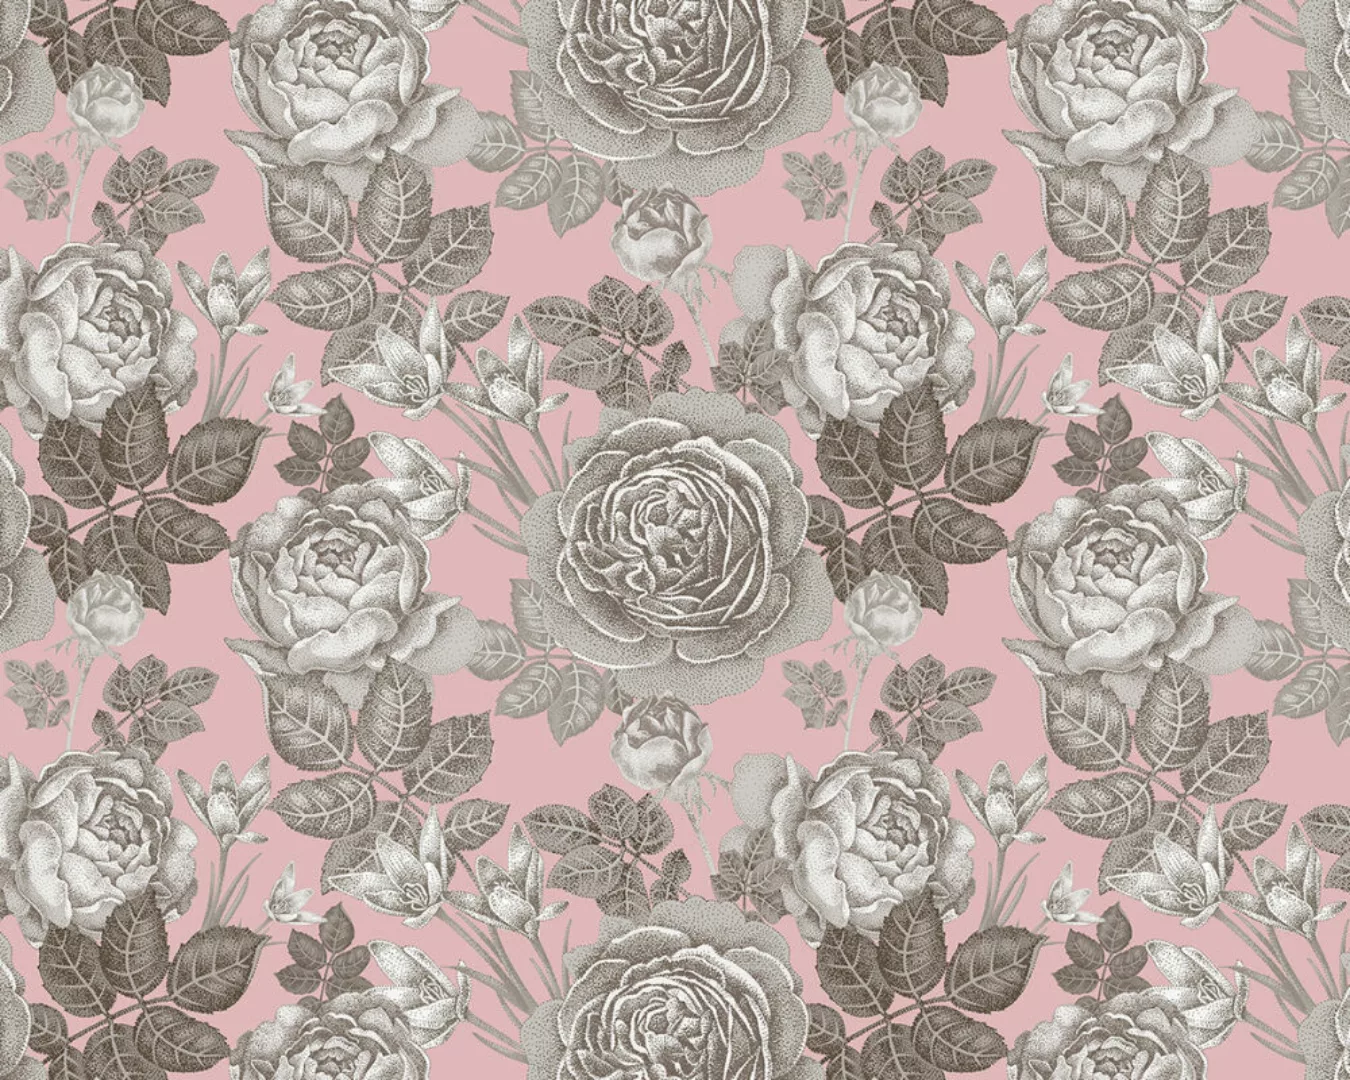 Fototapete "Roses Pink" 4,00x2,50 m / Glattvlies Perlmutt günstig online kaufen